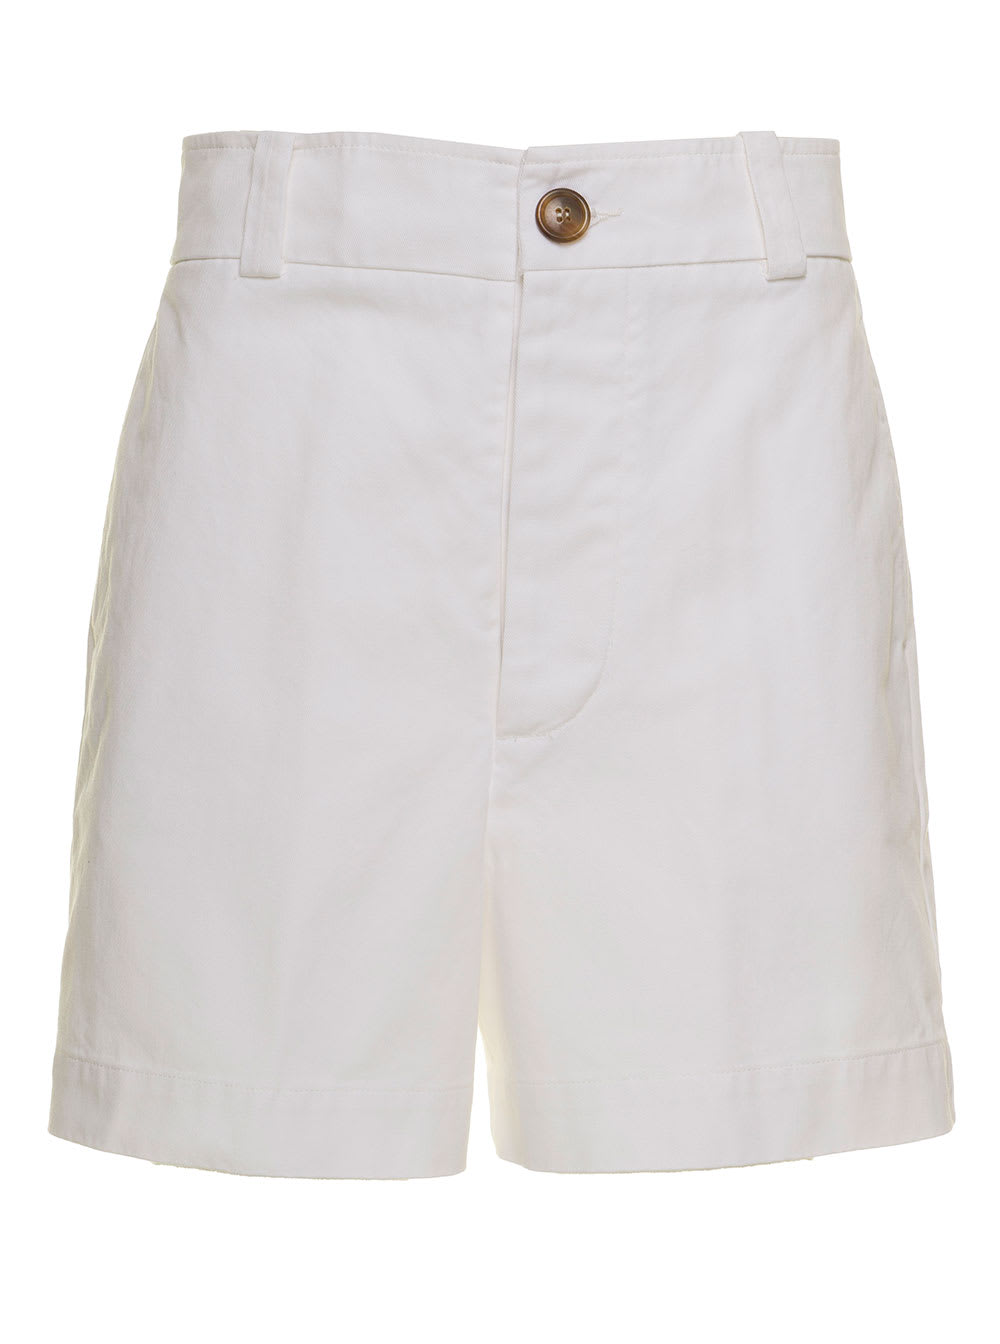 Mauro Grifoni Grifoni Womans White Cotton Shorts